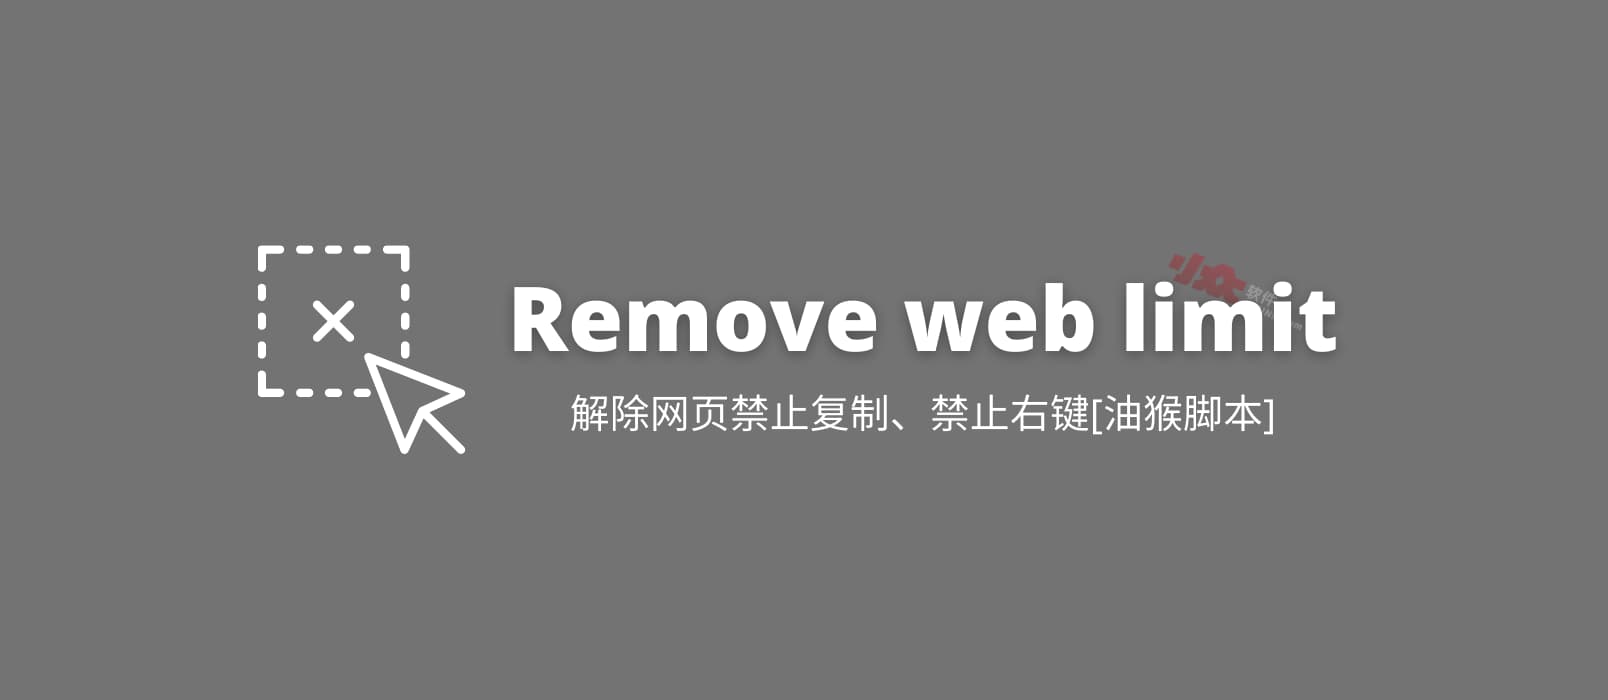 Remove web limits - 解除网页禁止复制限制、禁止右键限制[油猴脚本]